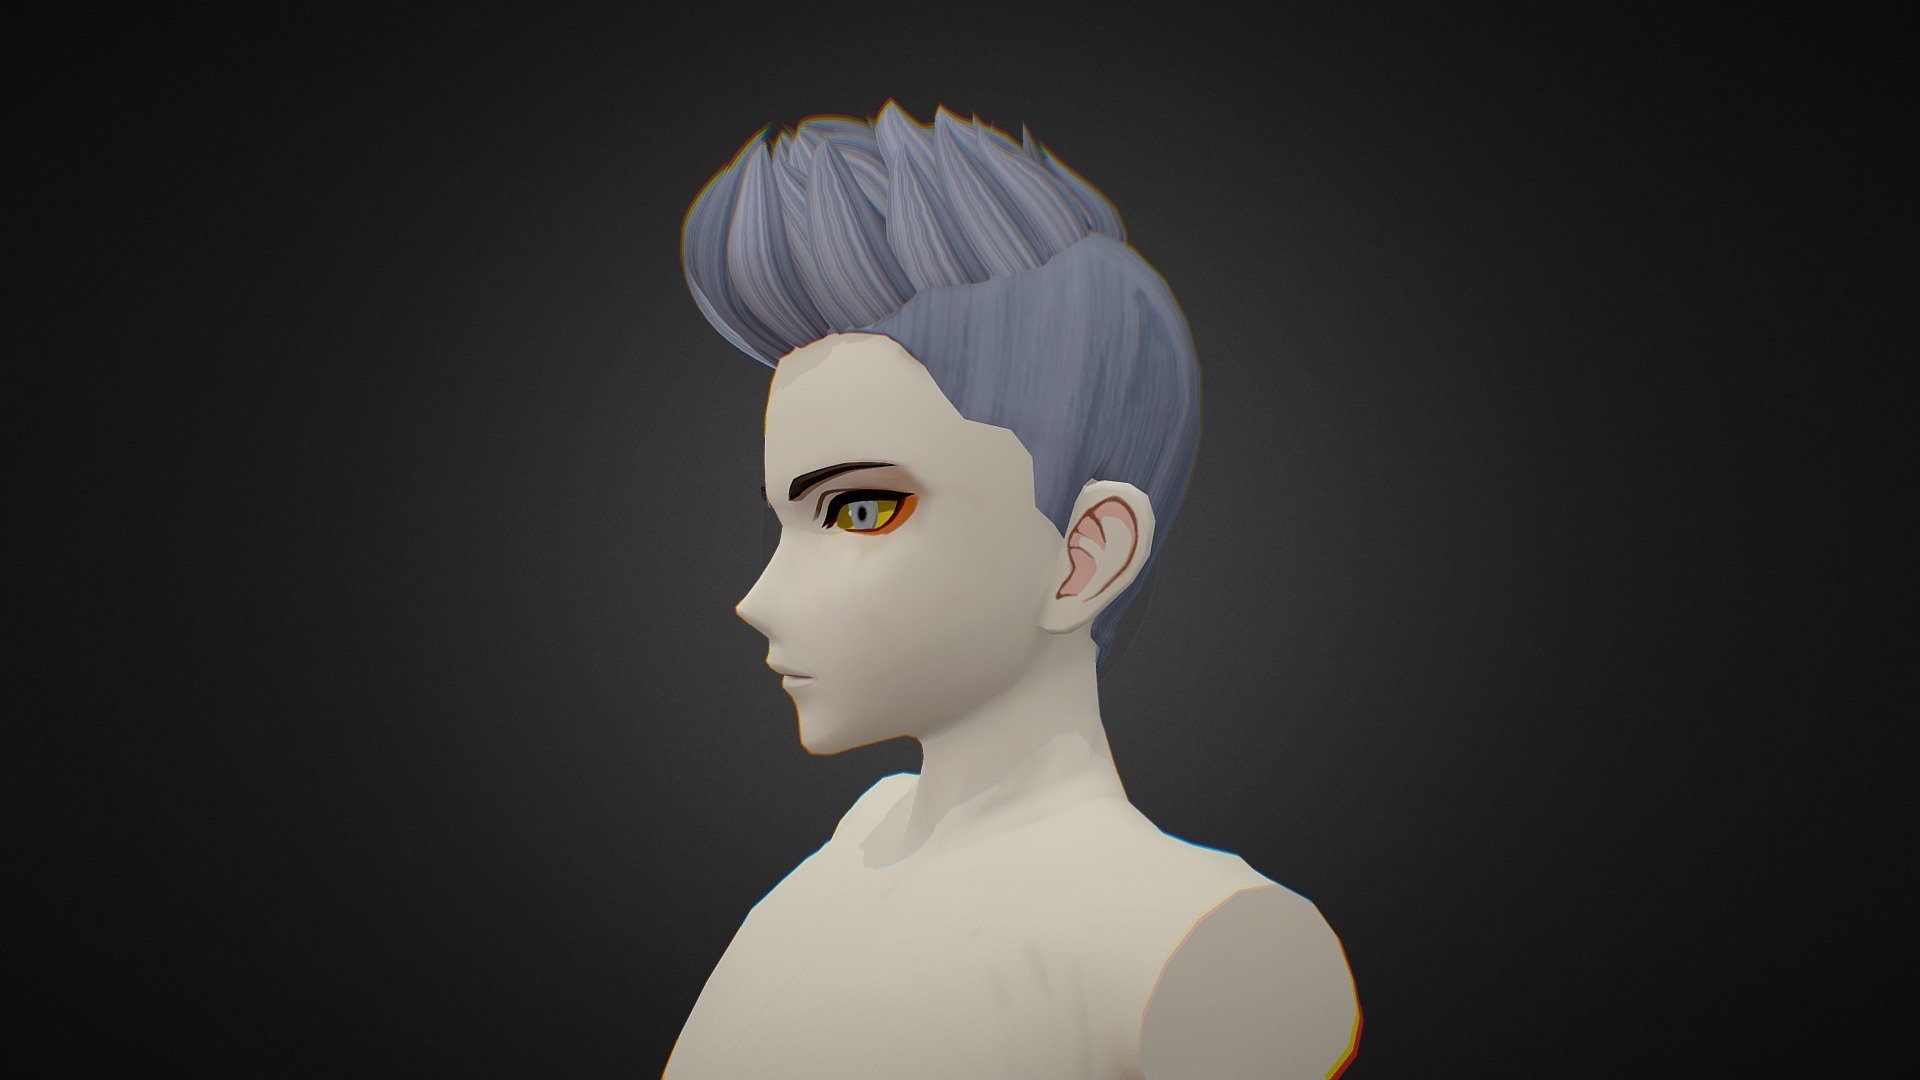 Anime Hair 4 - 3D model by HiepVu (@ngchipv) 3d model